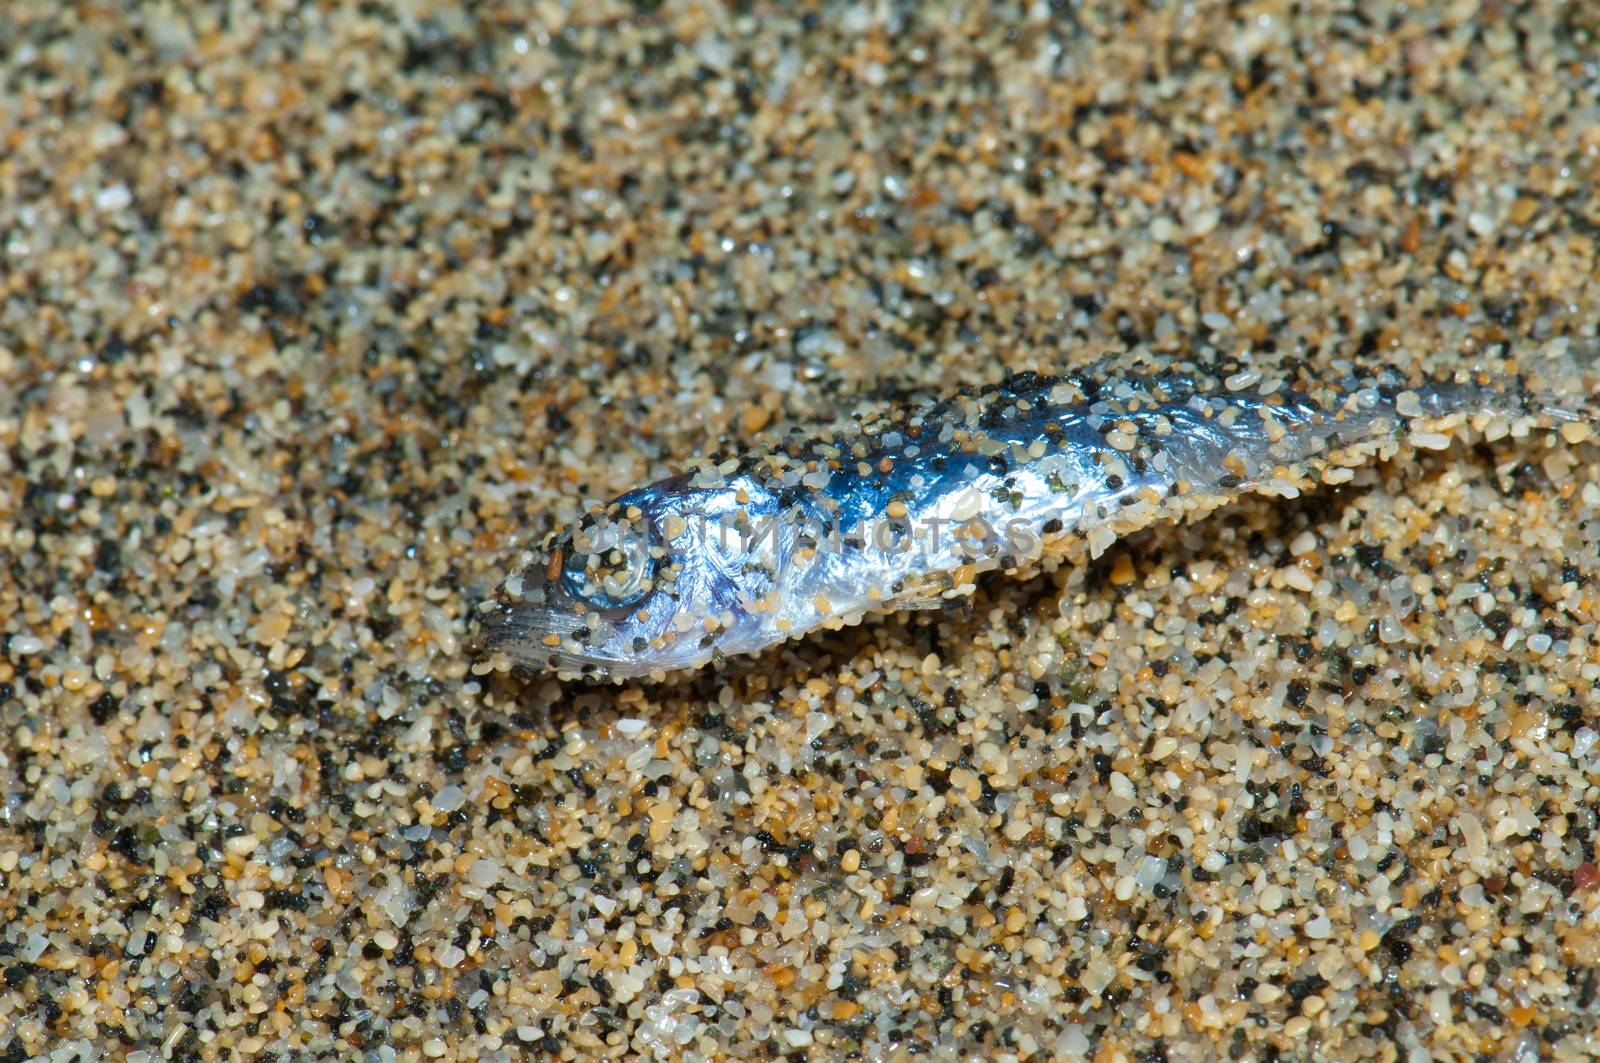 Dead Atlantic horse mackerel (Trachurus trachurus) wash up on shore. by VictorSuarez